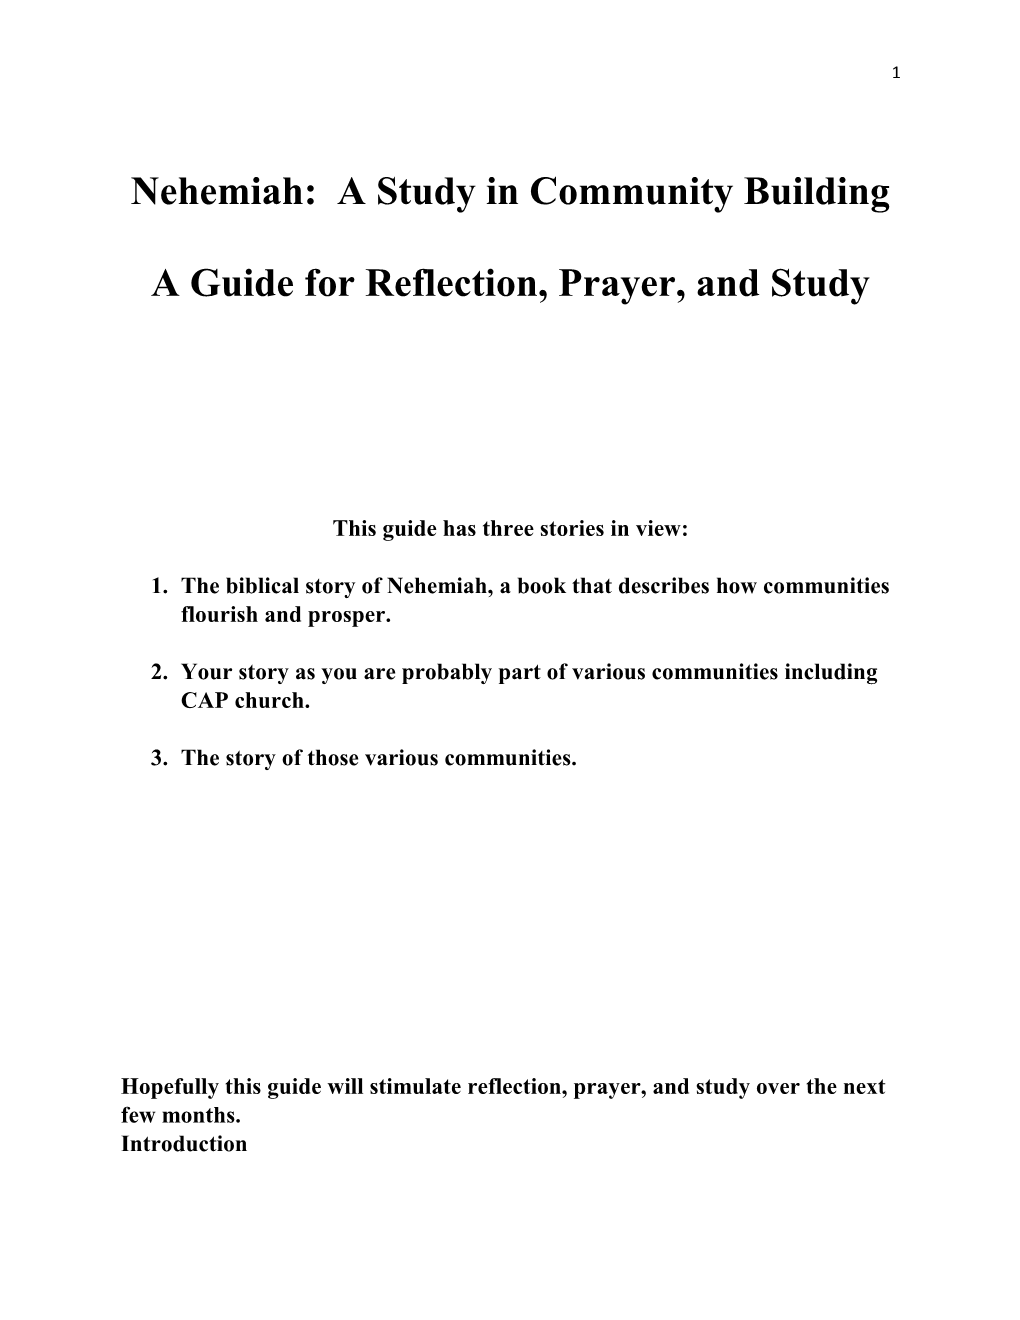 Nehemiah: a Study in Community Building